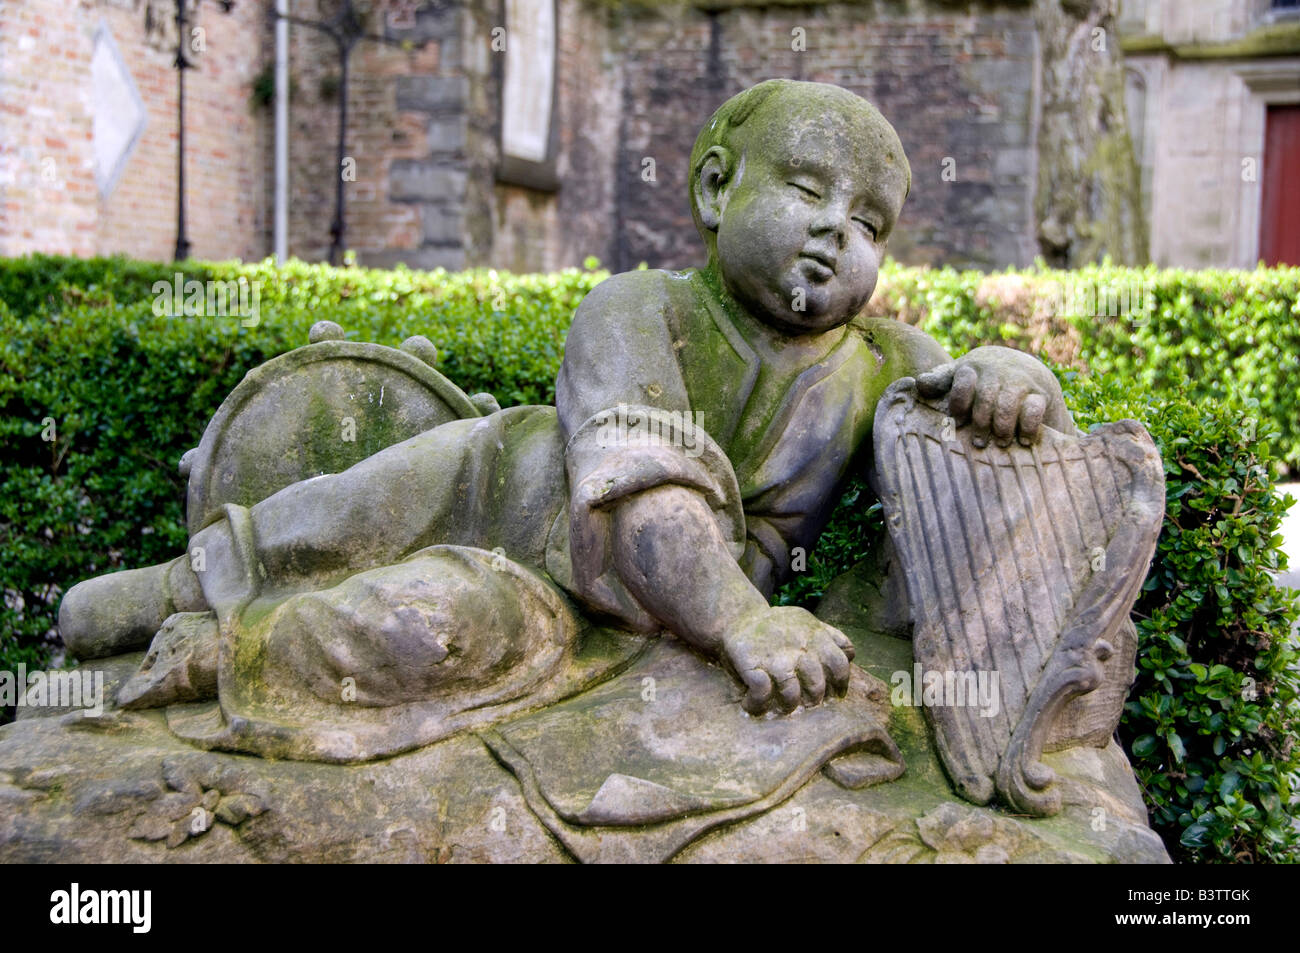 Europe, Belgium, Brugge (aka Brug or Bruge). Historic Brugge, UNESCO World Heritige Site. Stock Photo